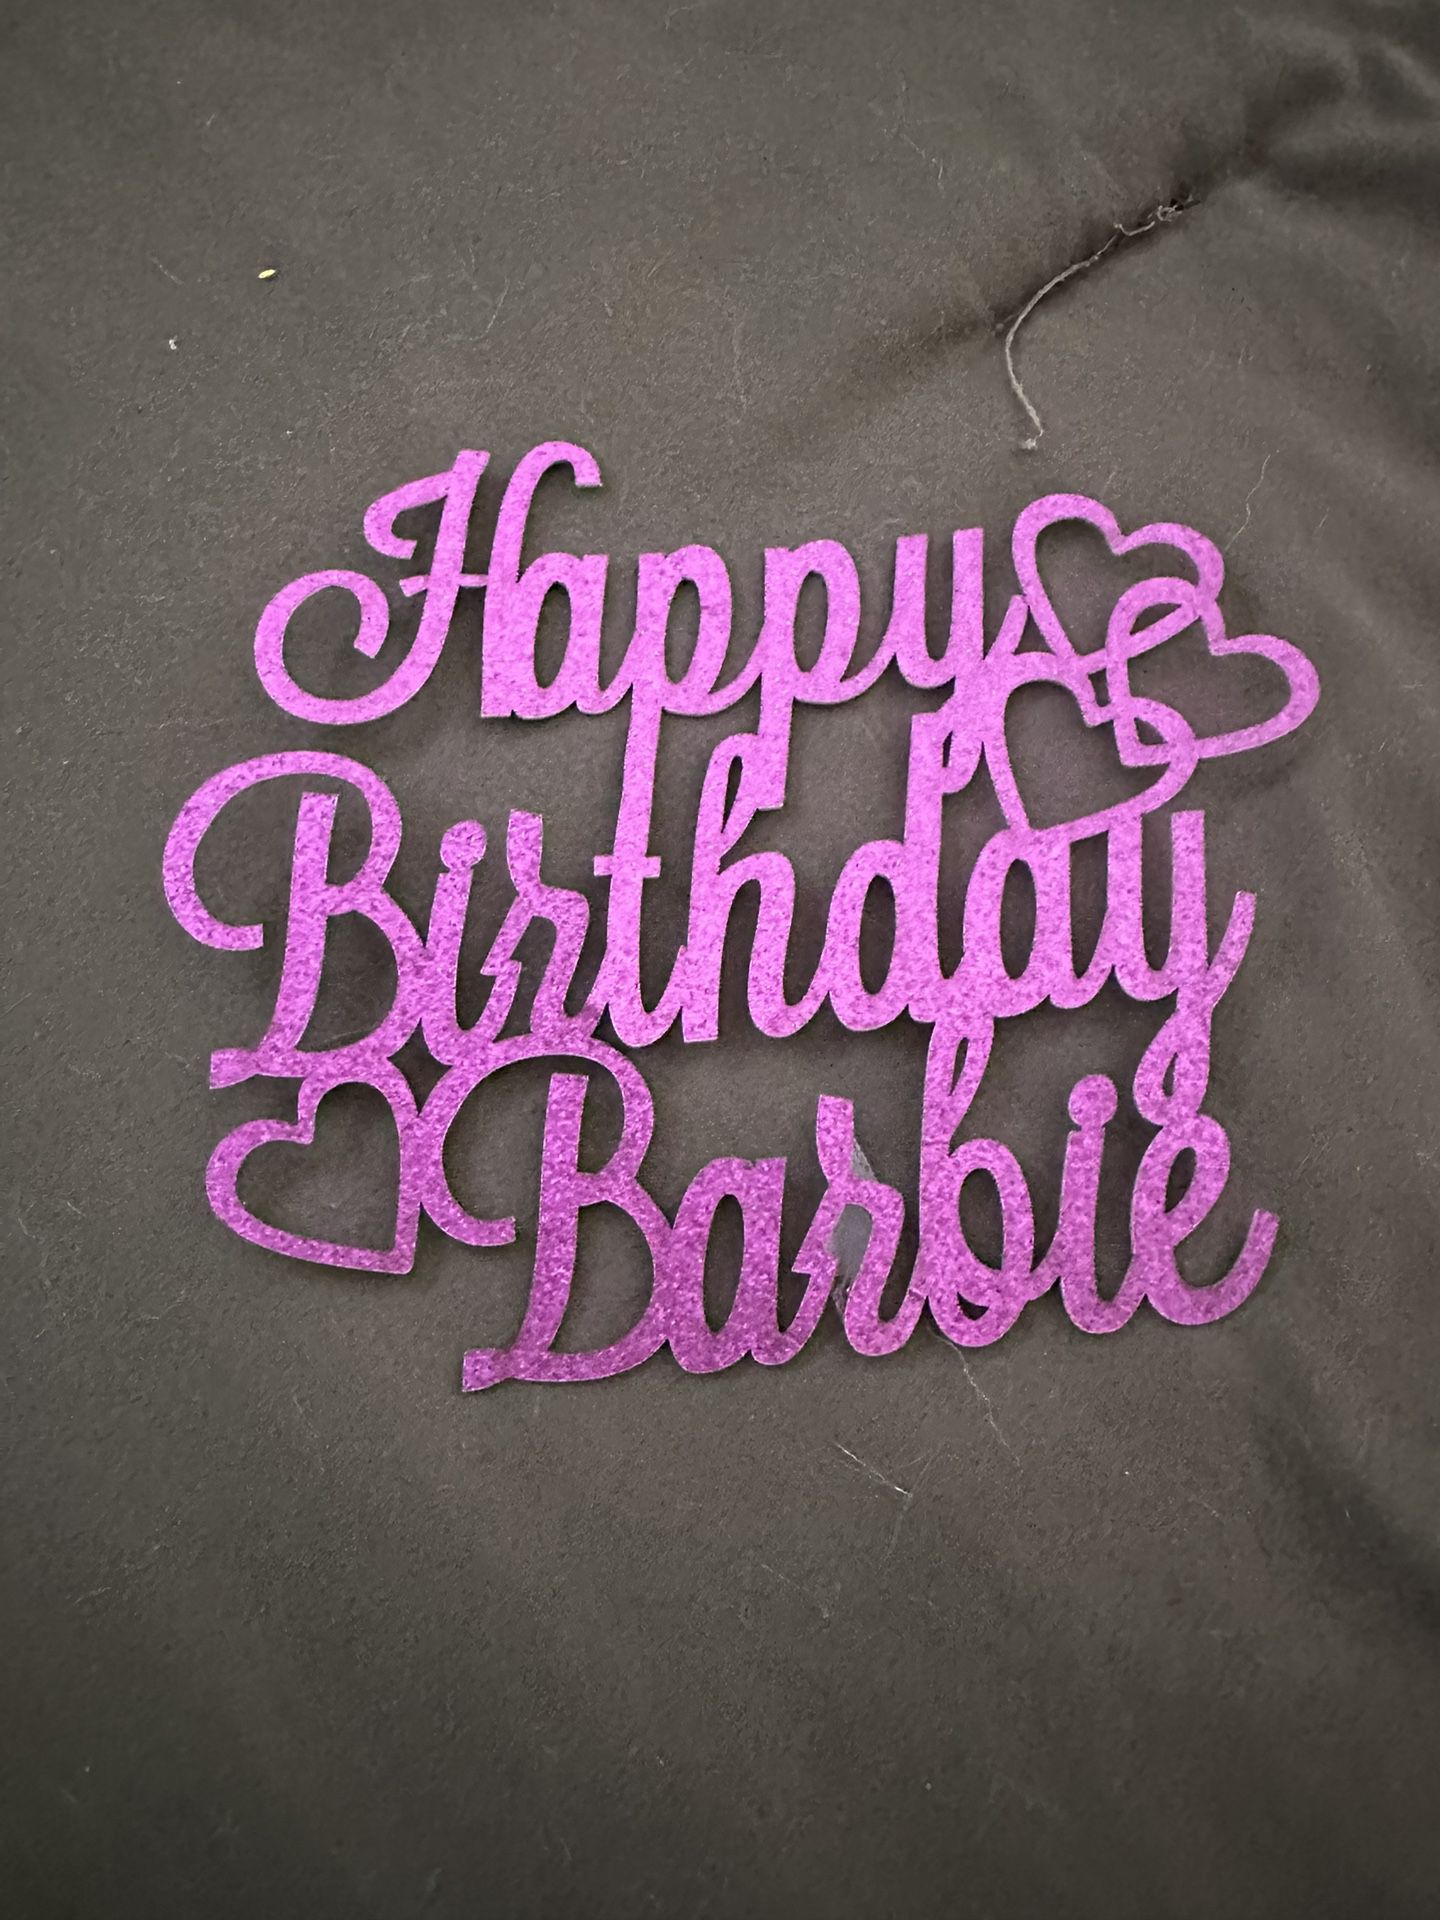 Birthday Barbie Cake Topper 